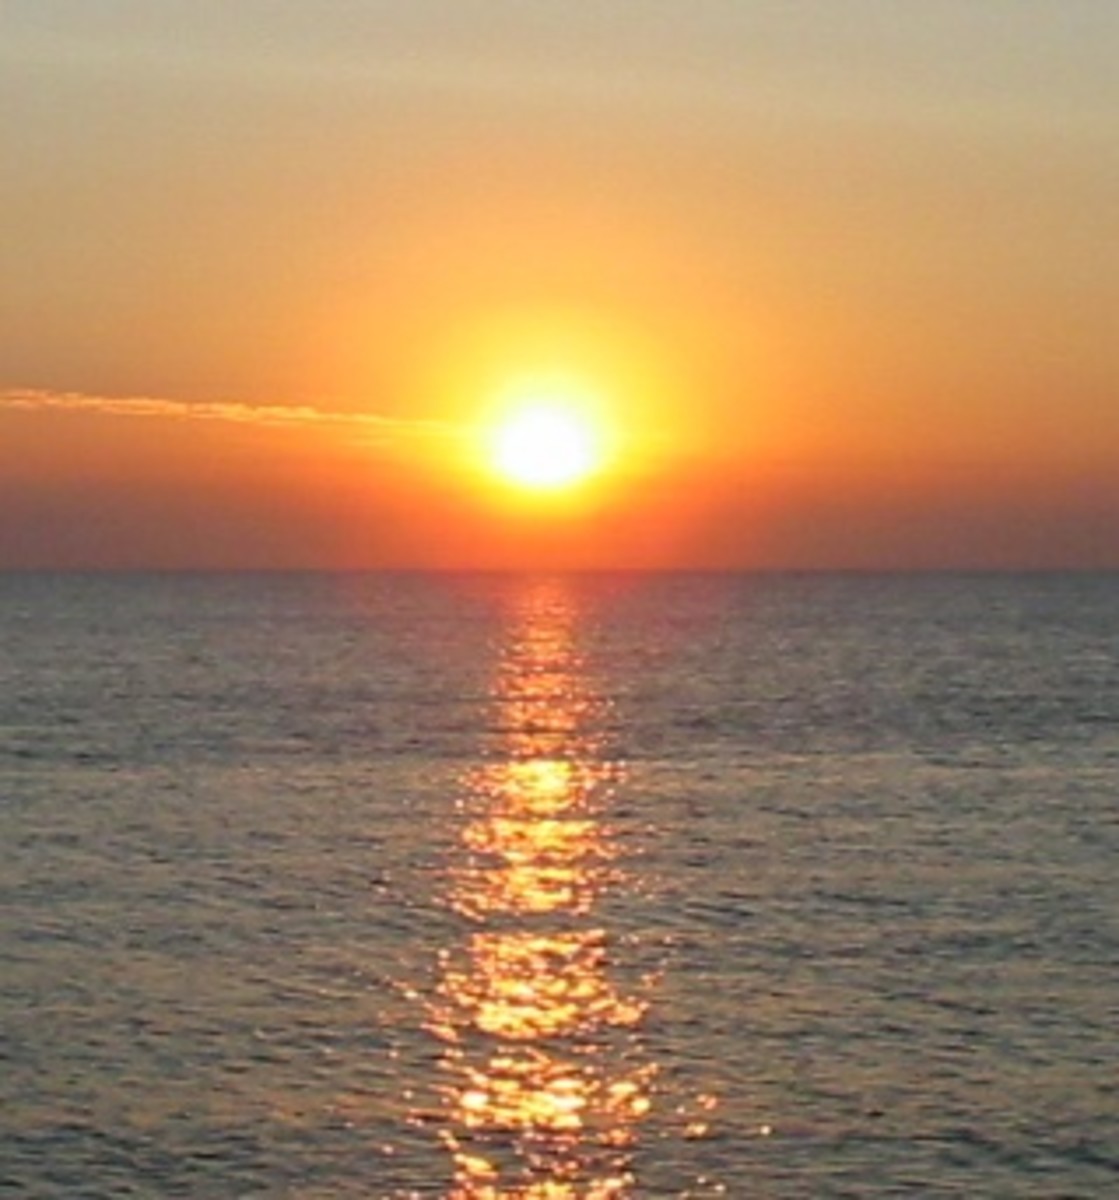 Sunrise over the Black Sea at Neptun, Romania.